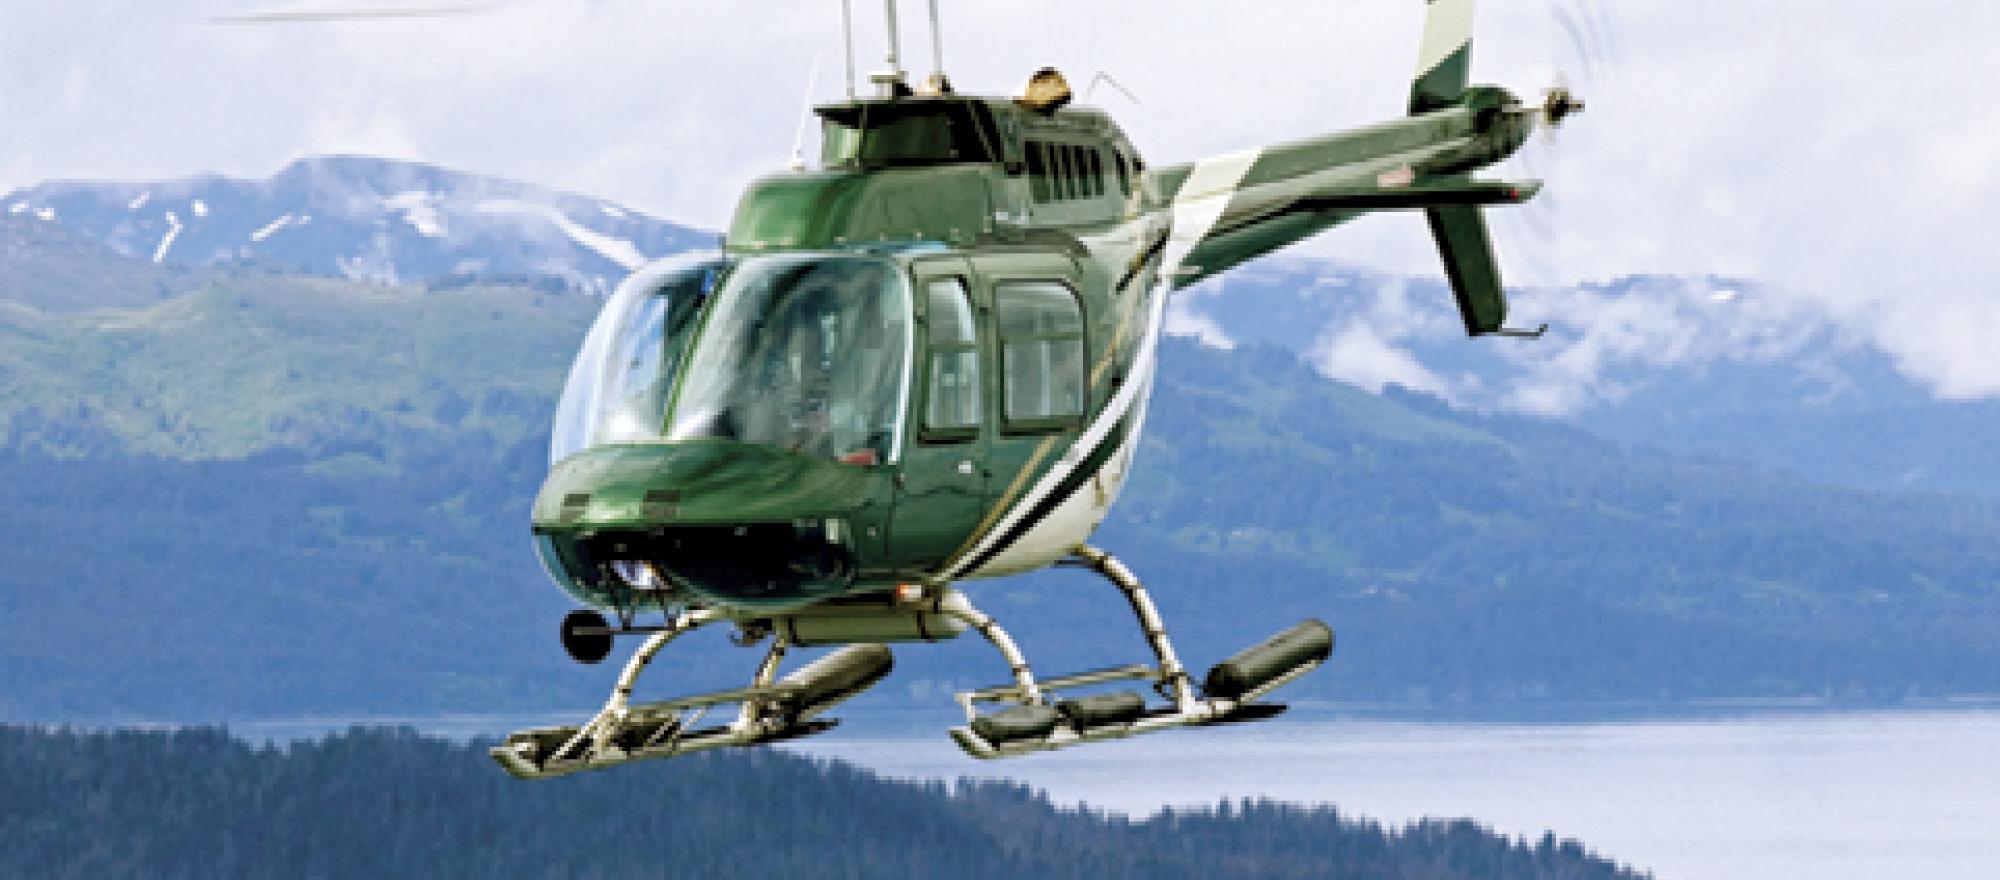 One pilot described the Bell 206 JetRanger as “bulletproof,” adding, “They ju